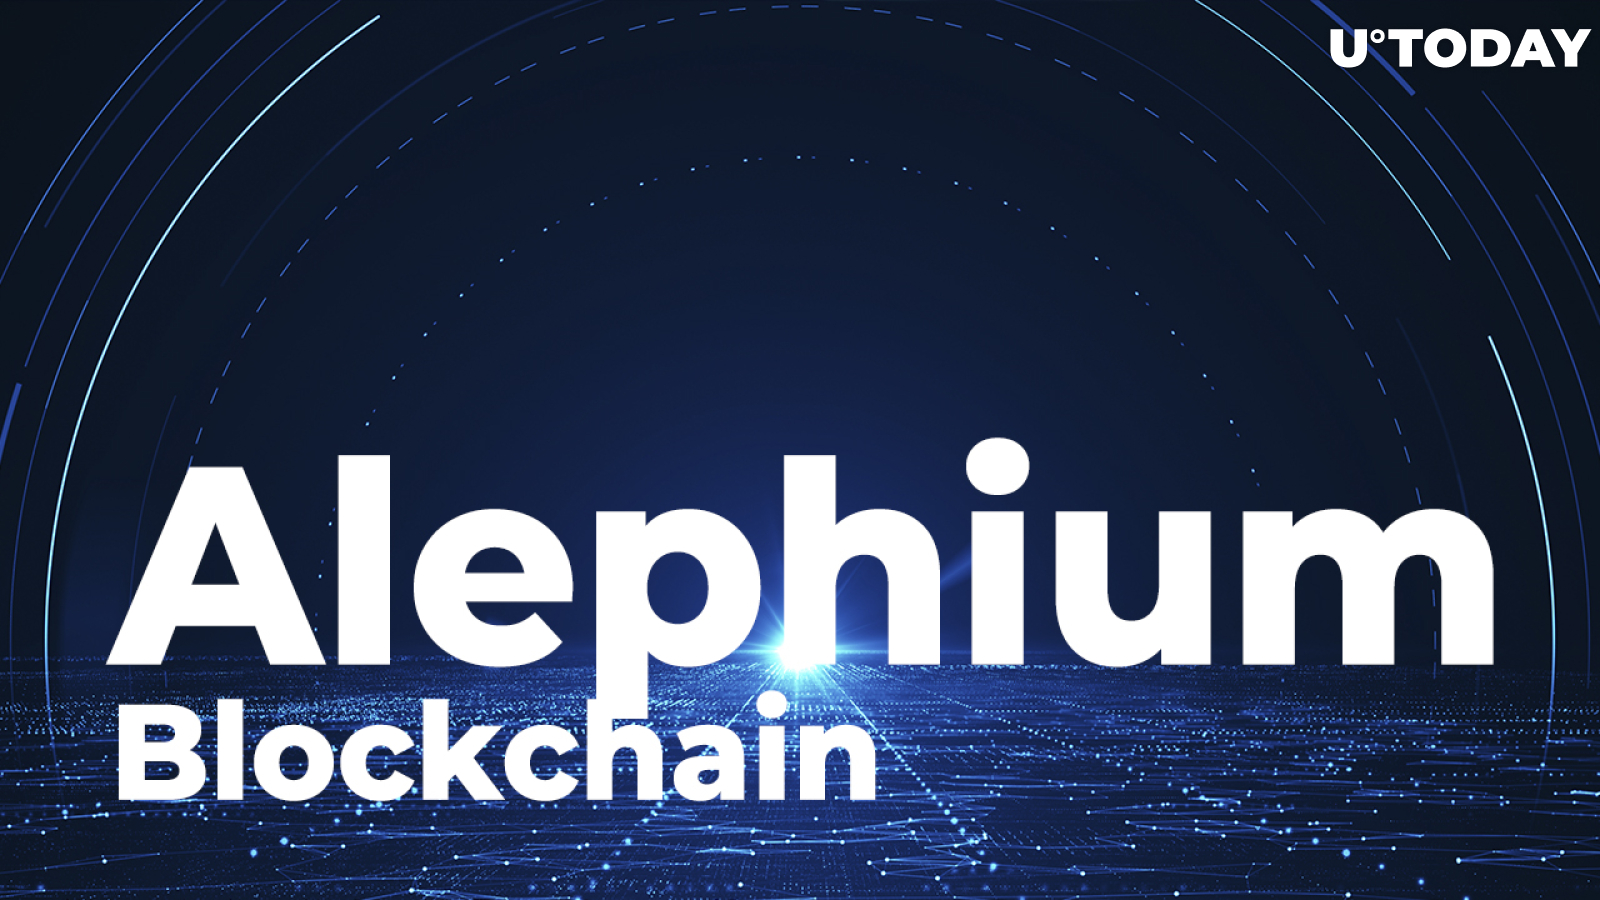 Alephium Blockchain Launches Unique Video Contest: Details